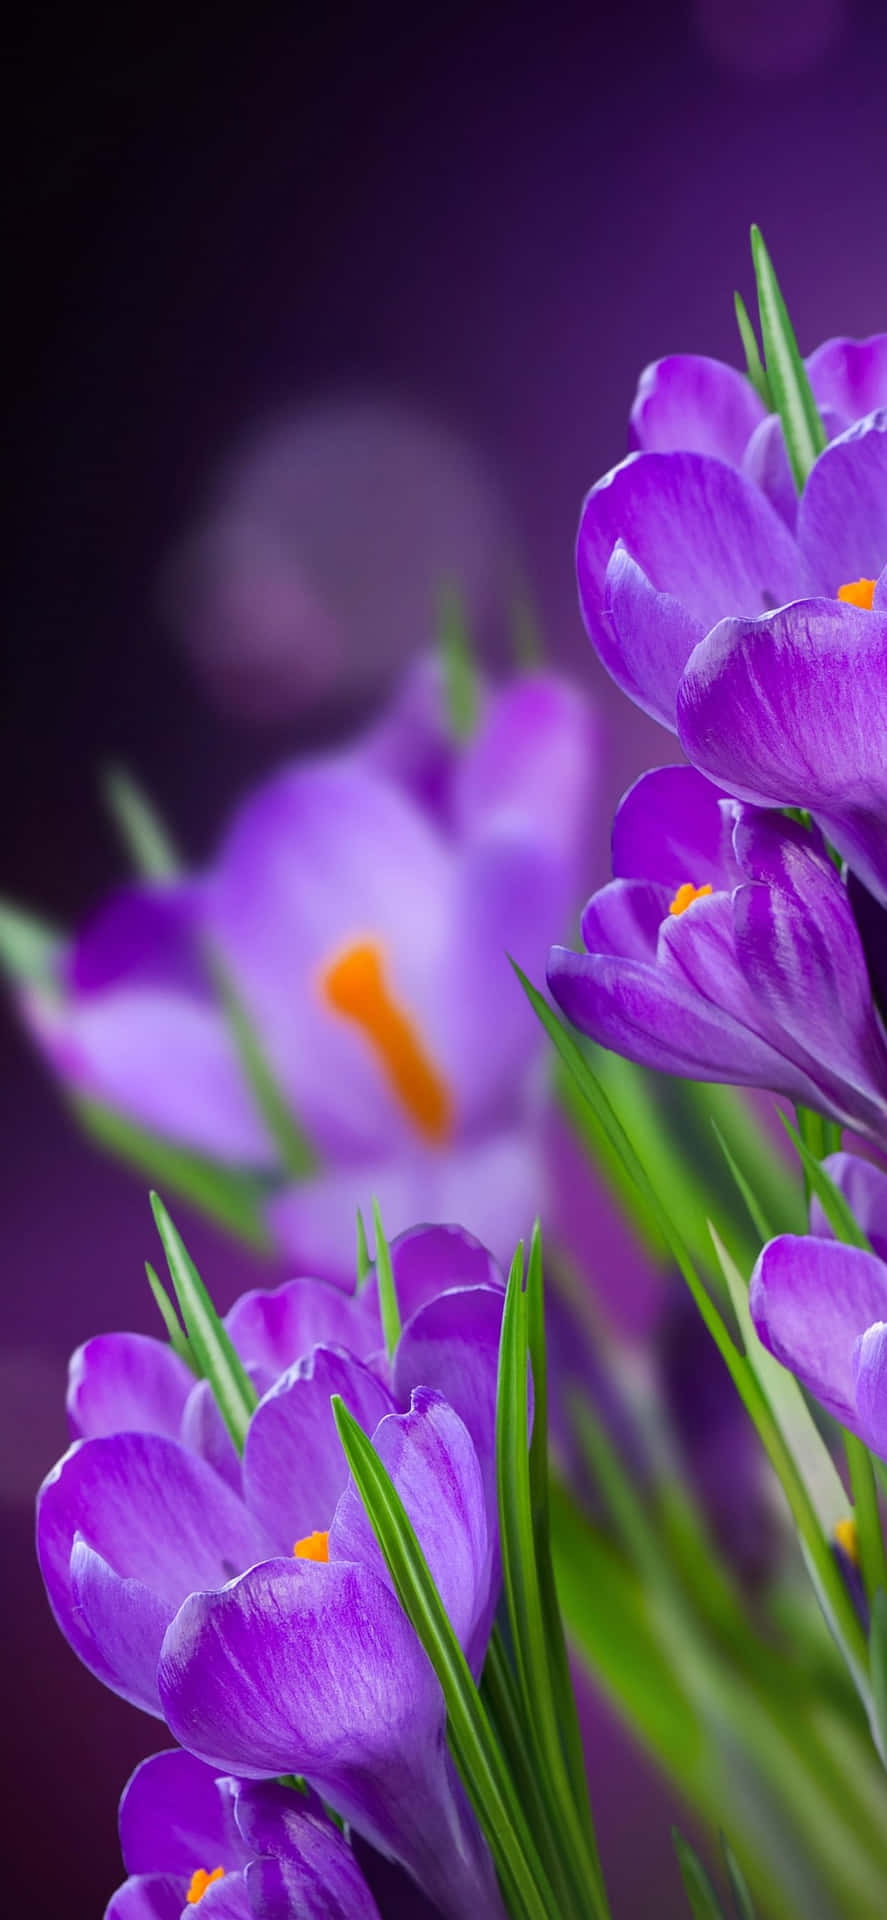 Delightful Dahlia - Floral Iphone Background